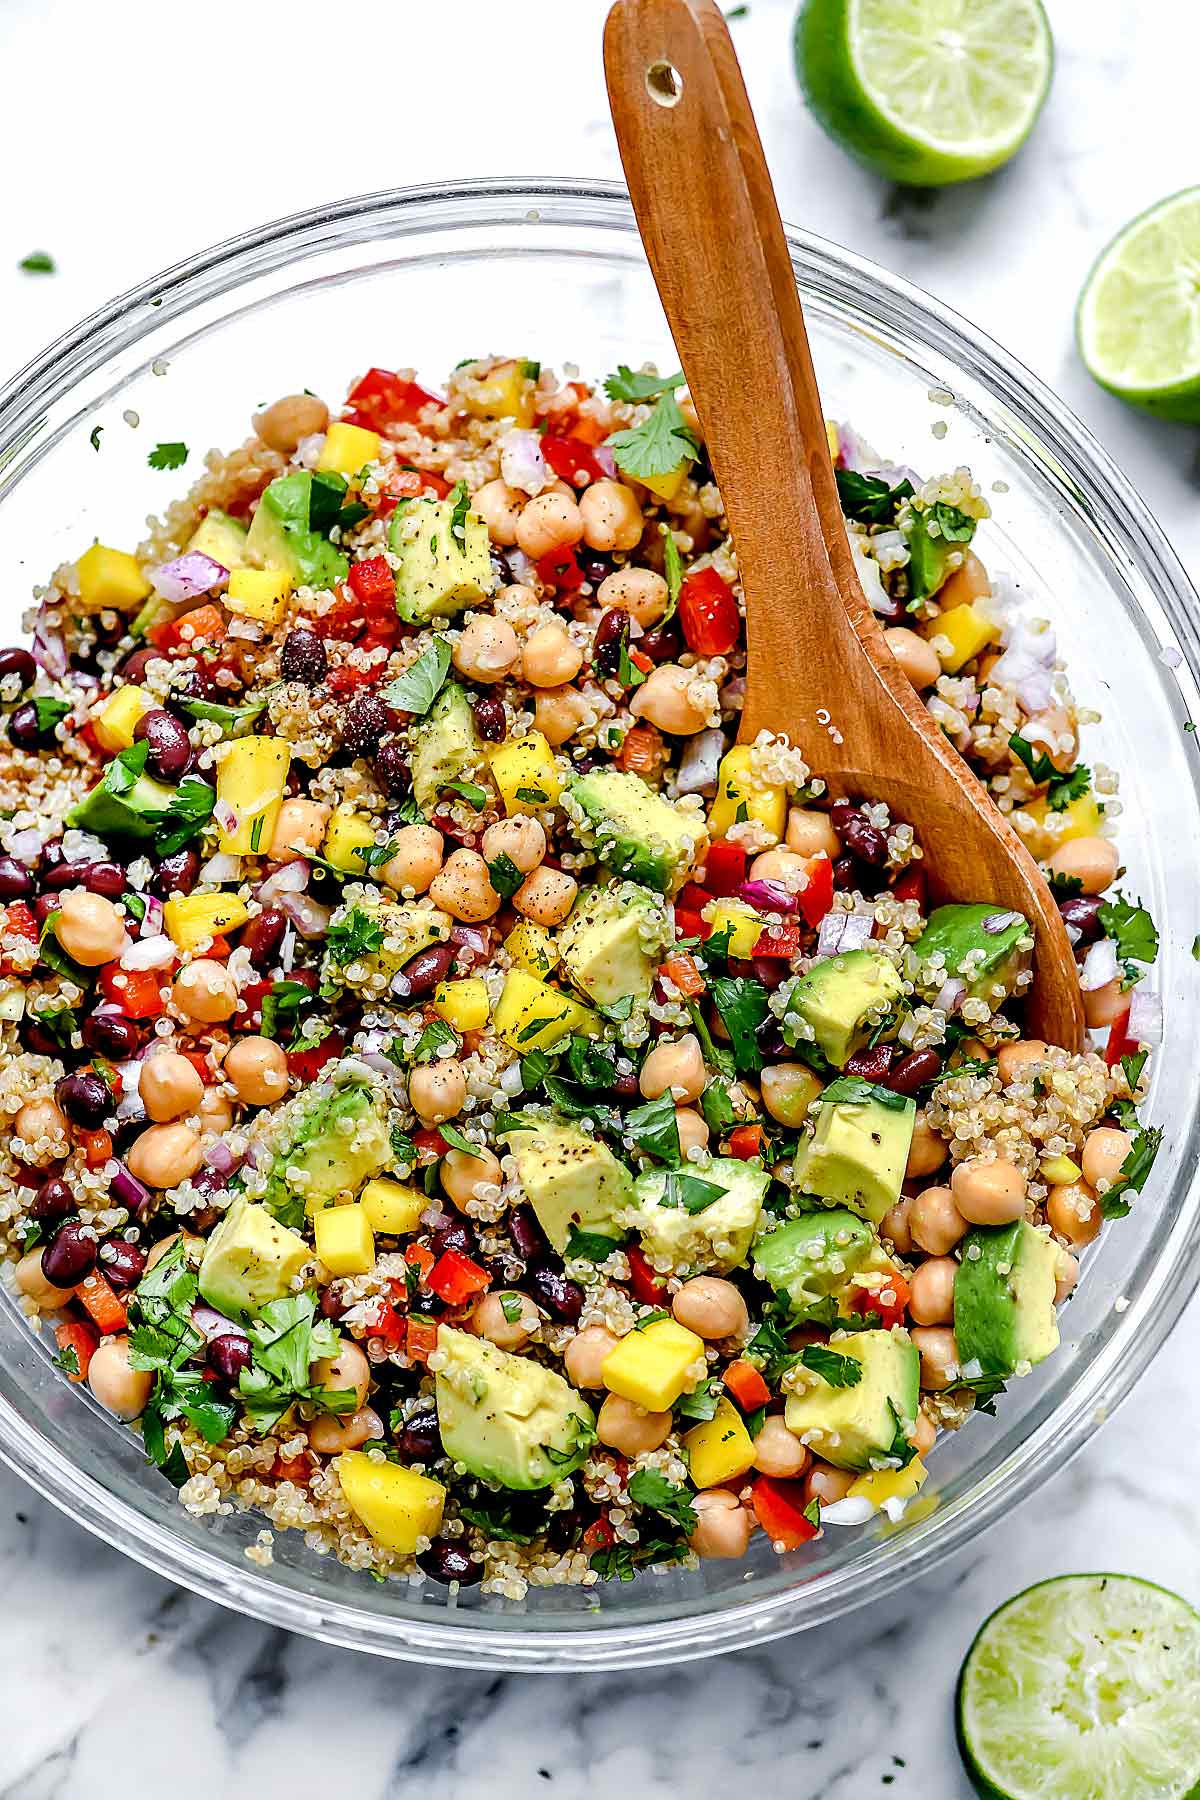 https://www.foodiecrush.com/wp-content/uploads/2020/01/Healthy-Quinoa-Salad-foodiecrush.com-012.jpg